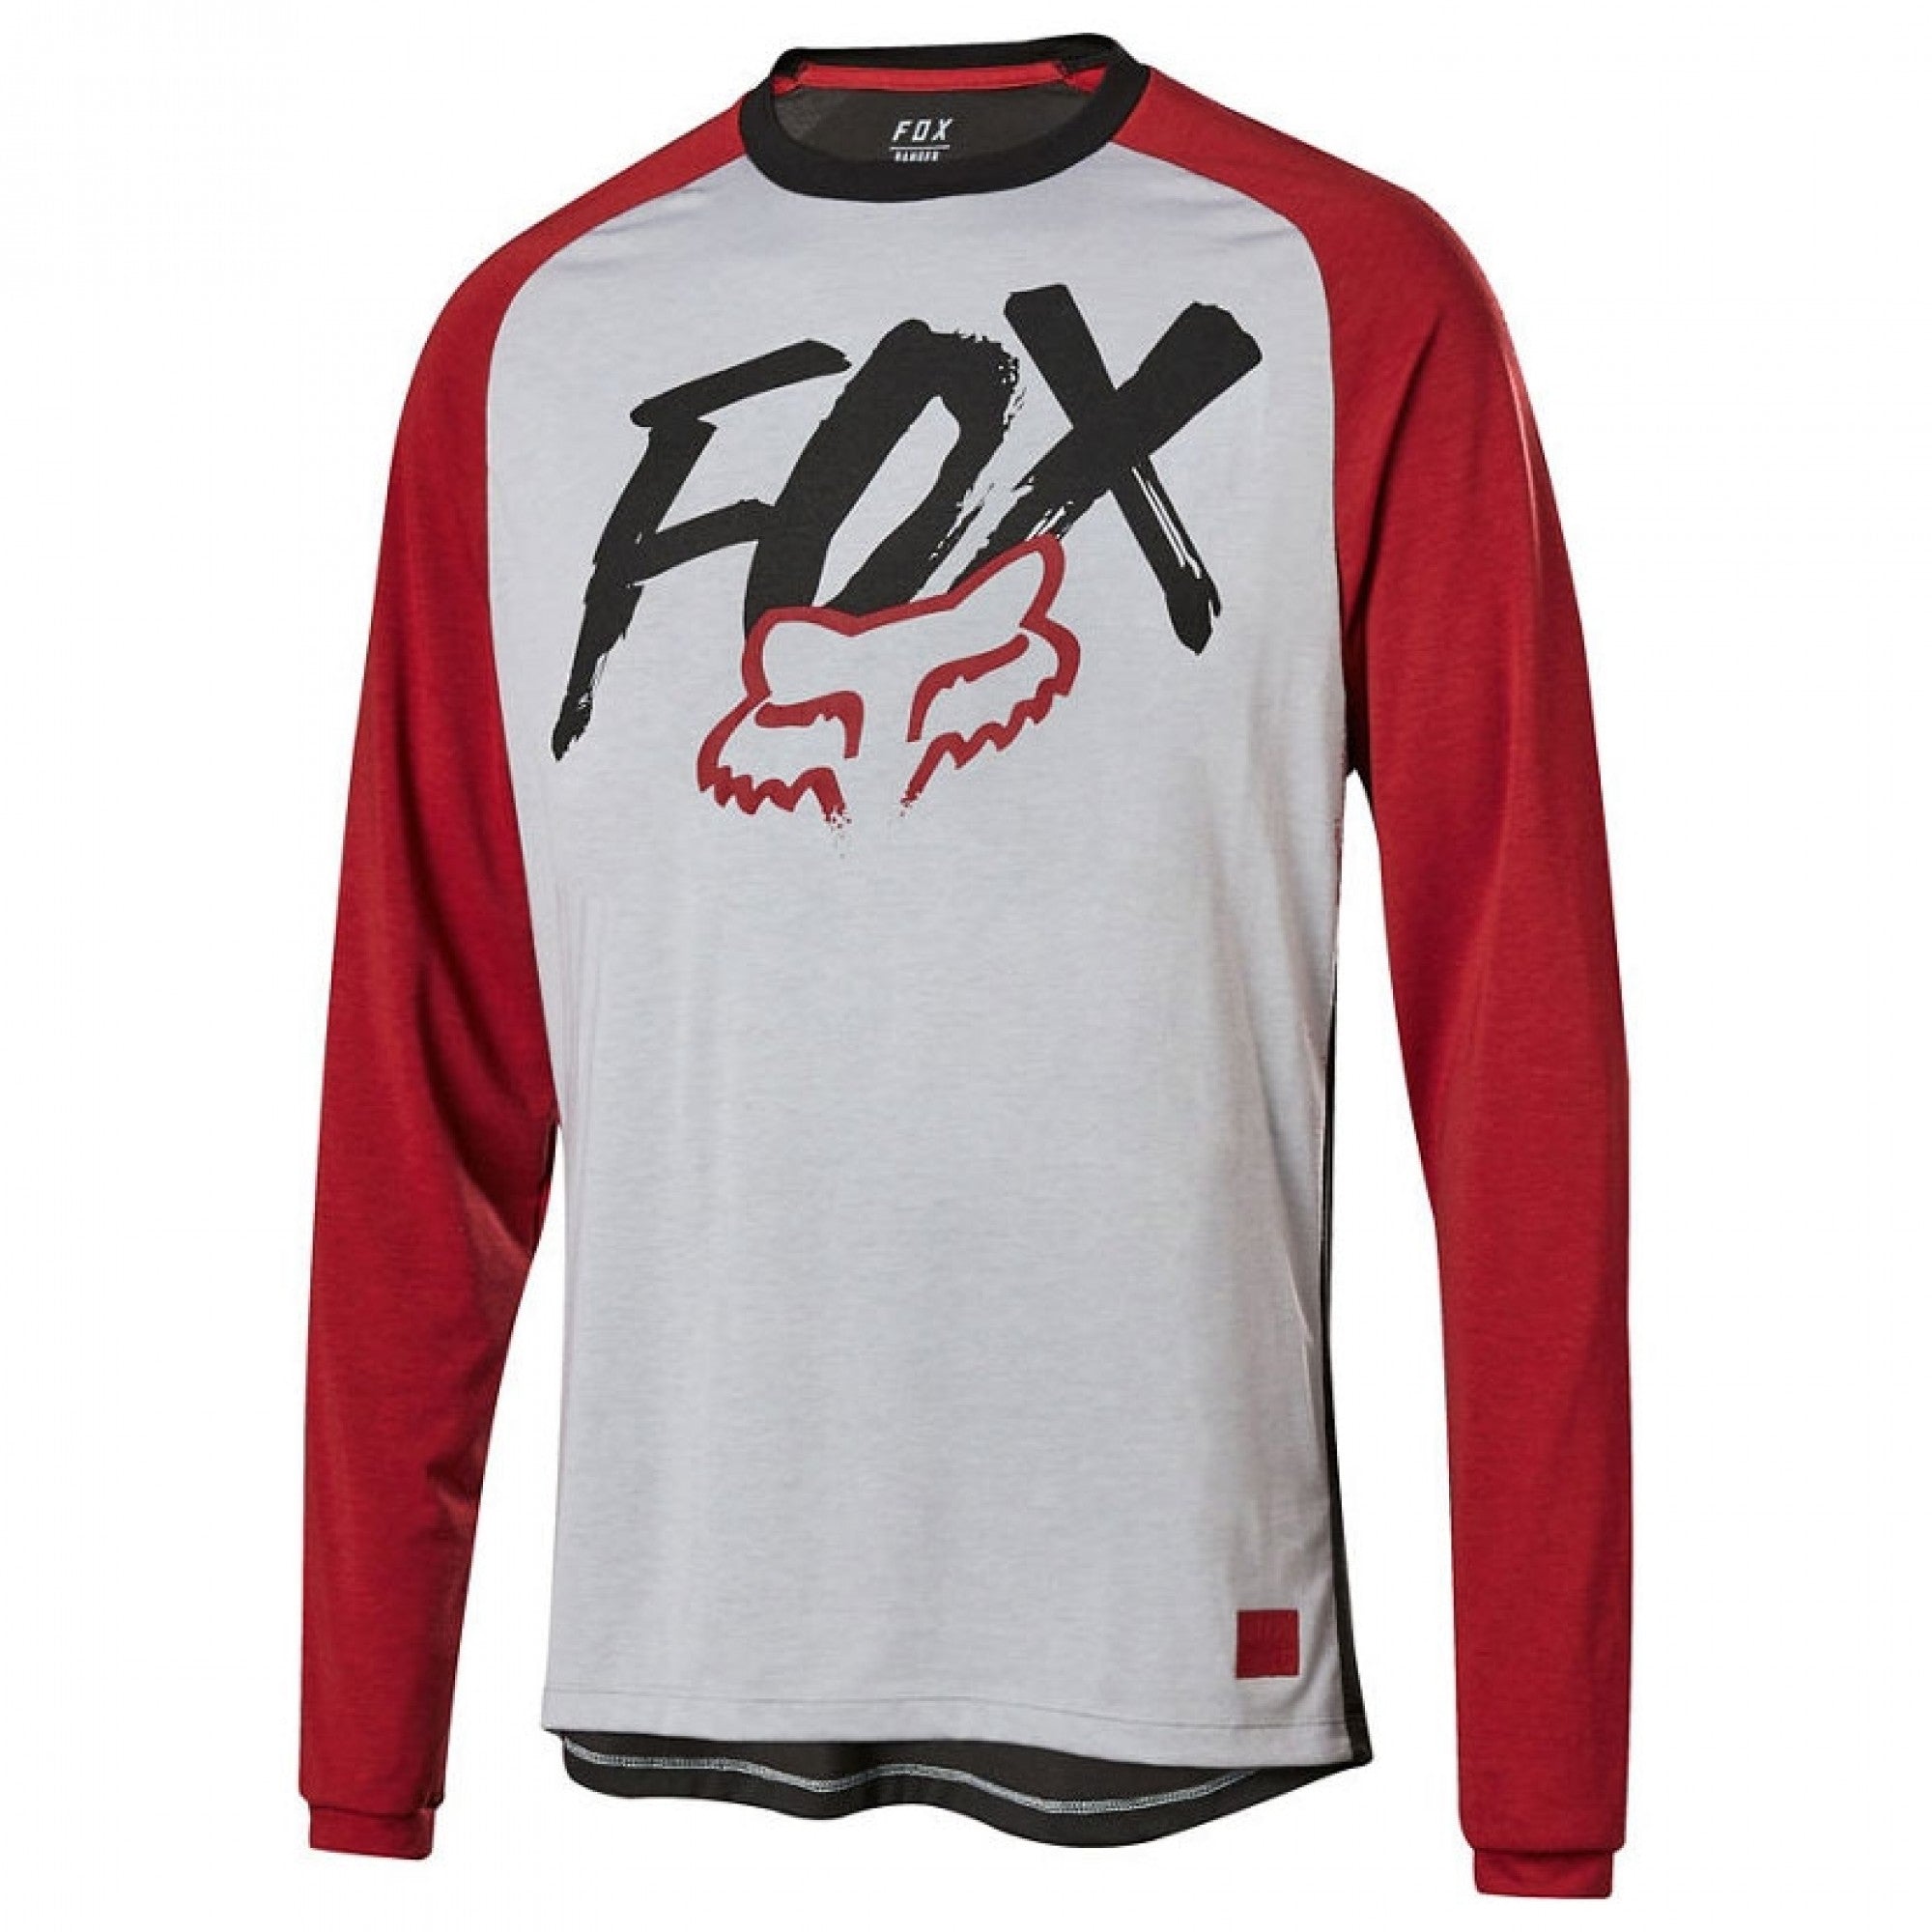 fox youth jersey